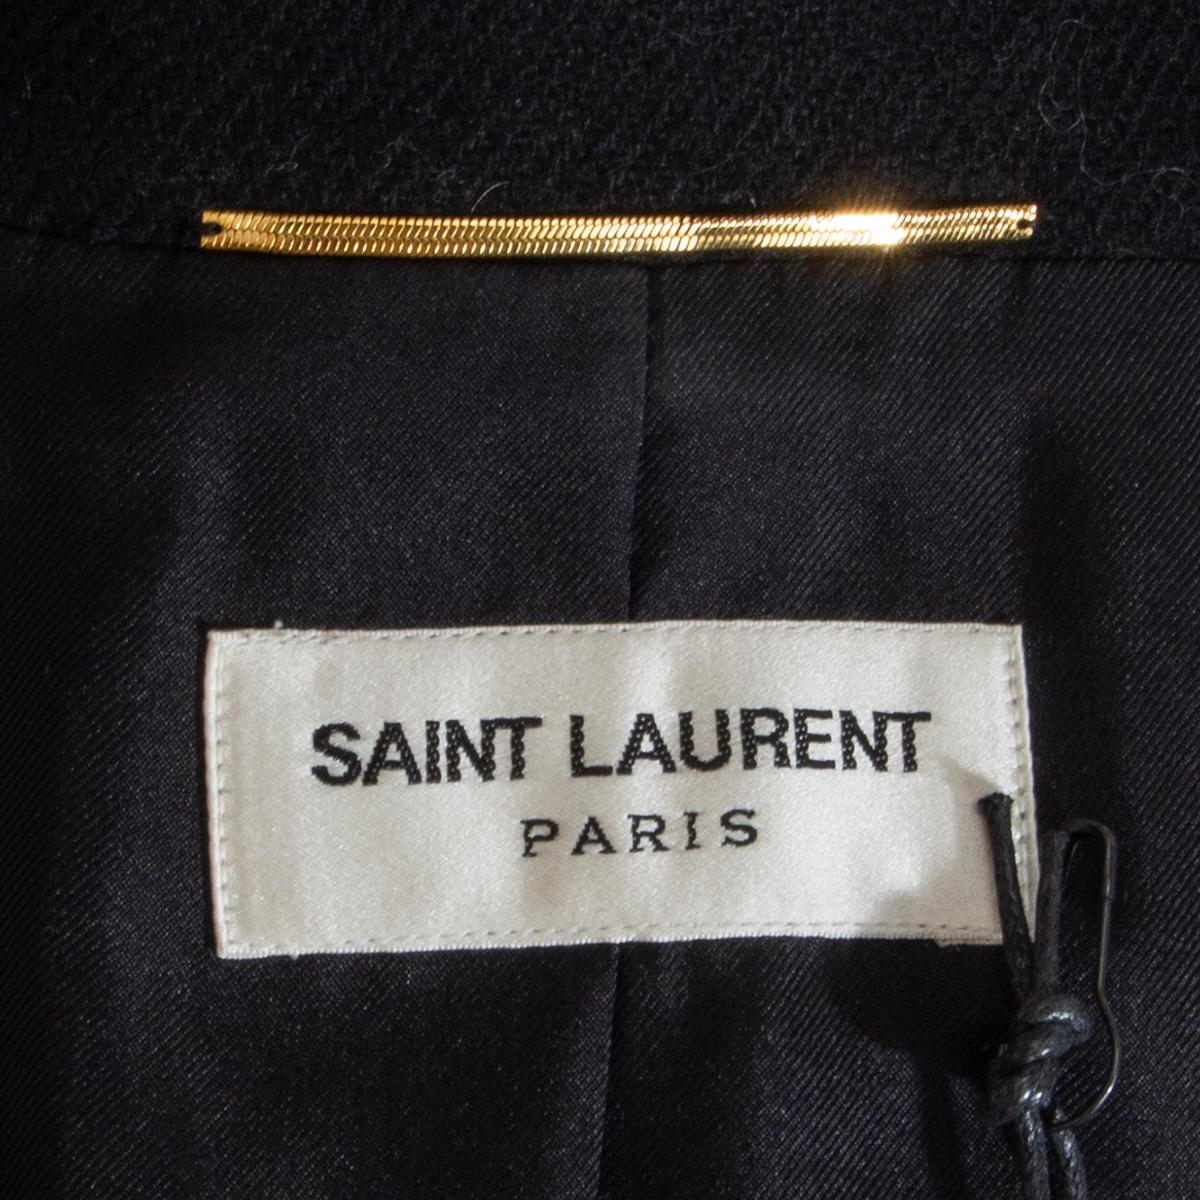 Black SAINT LAURENT black wool DOUBLE BREASTED PEACOAT Coat Jacket 38 S